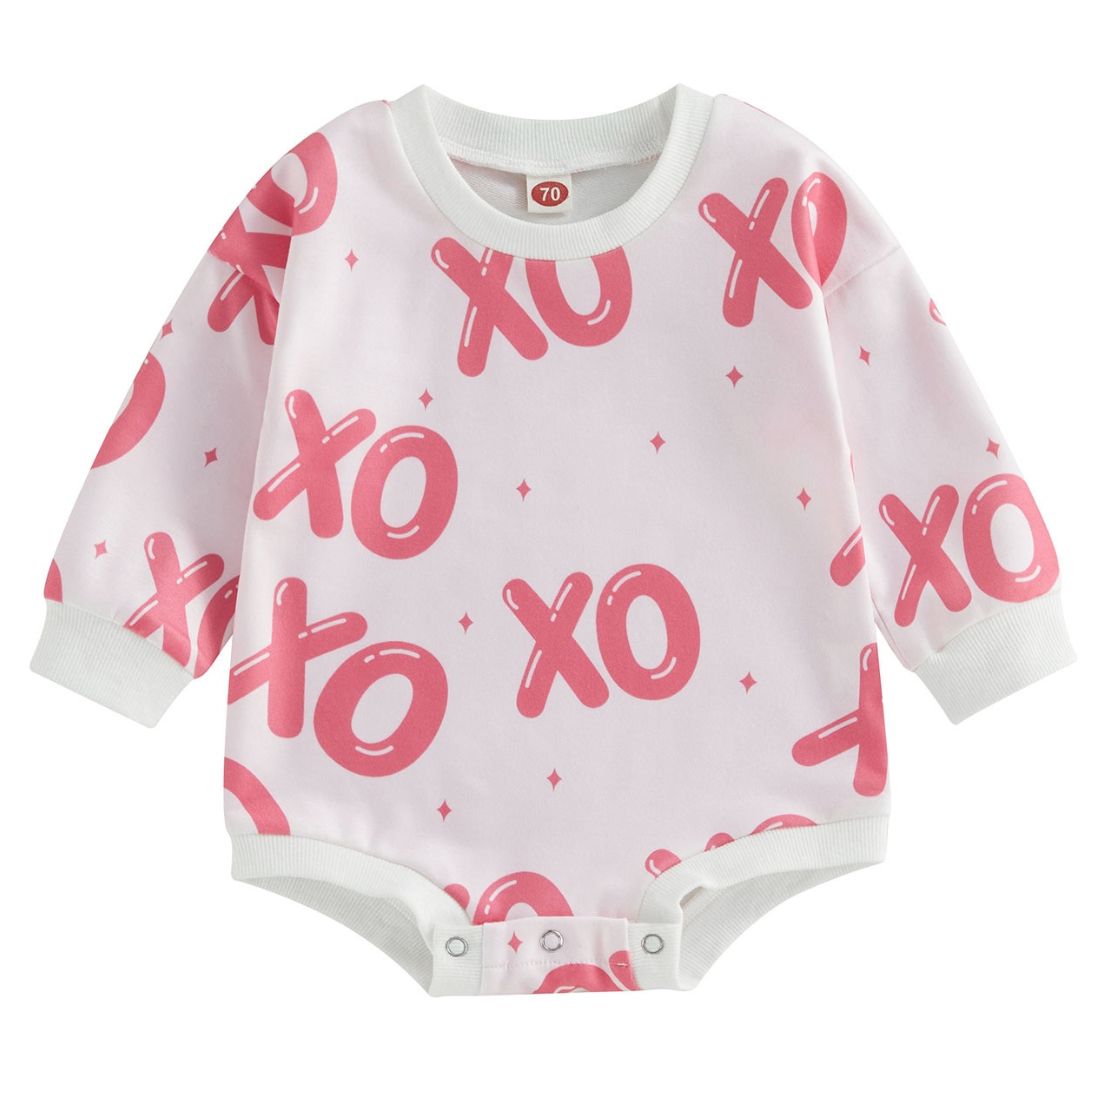 XOXO Print Valentine Love Baby Bodysuit